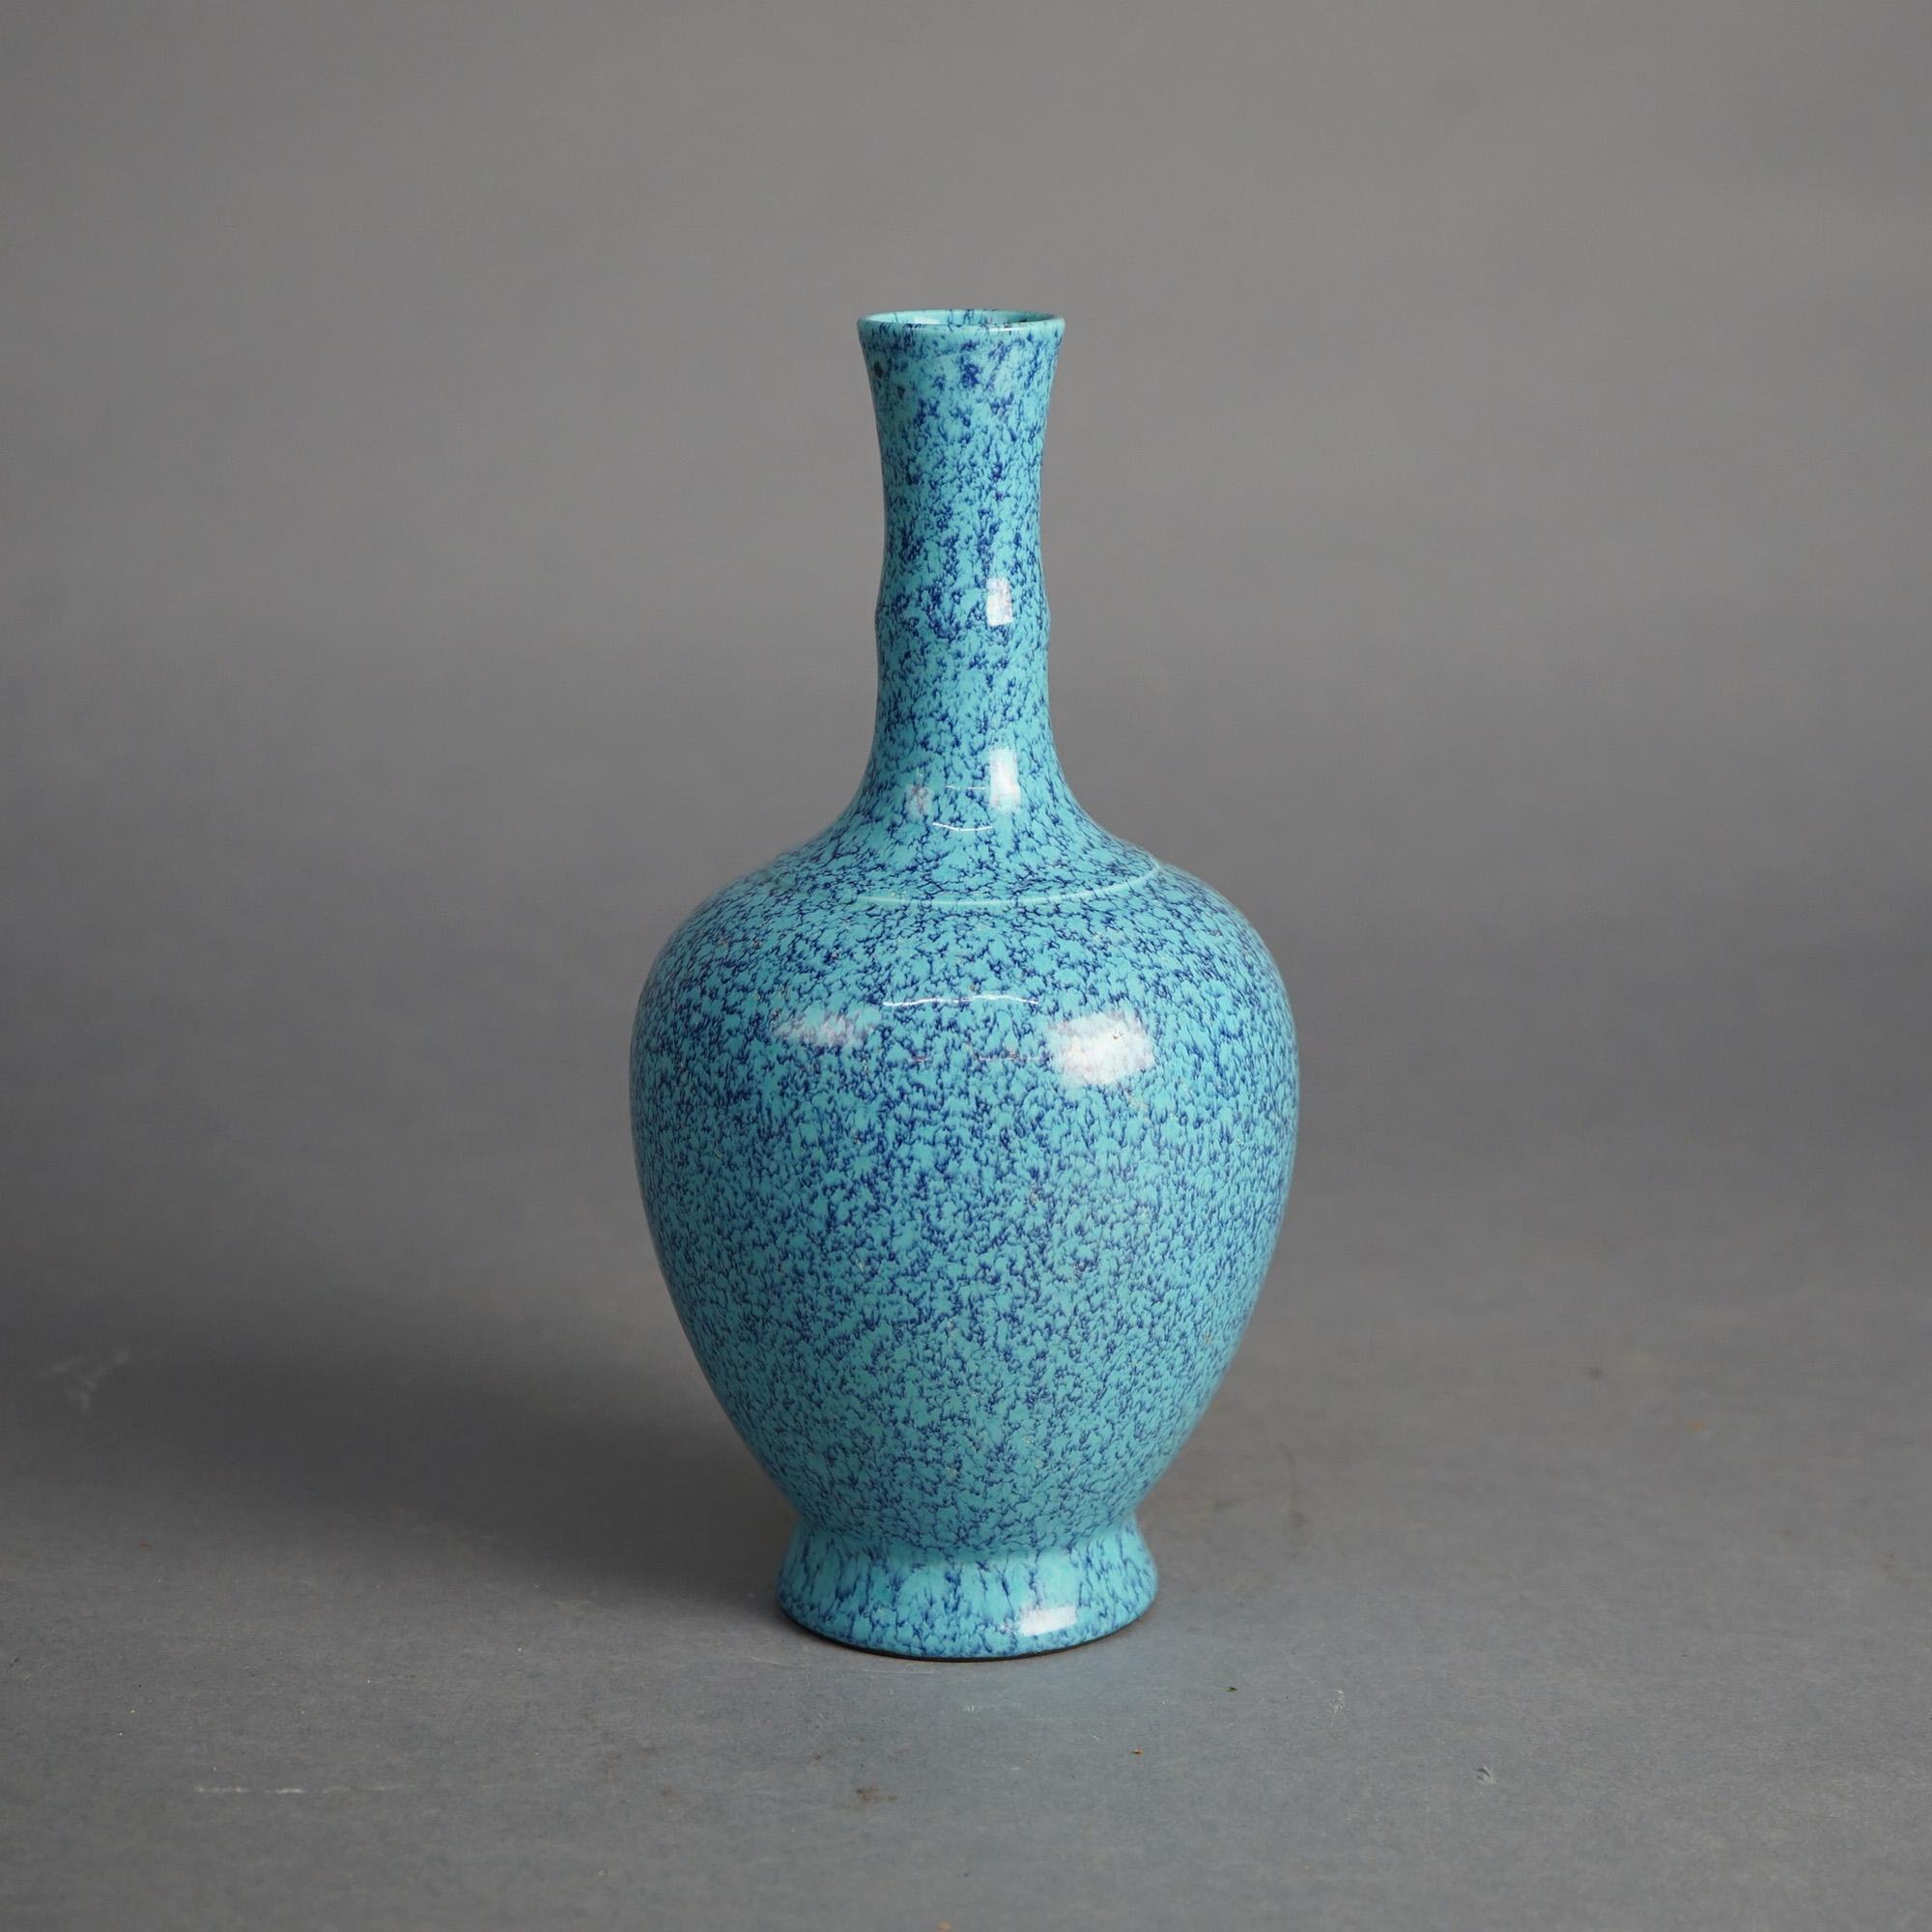 Chinese Robin Egg Porcelain Vase with Qianlong Mark 20thC

Measures - 9.5